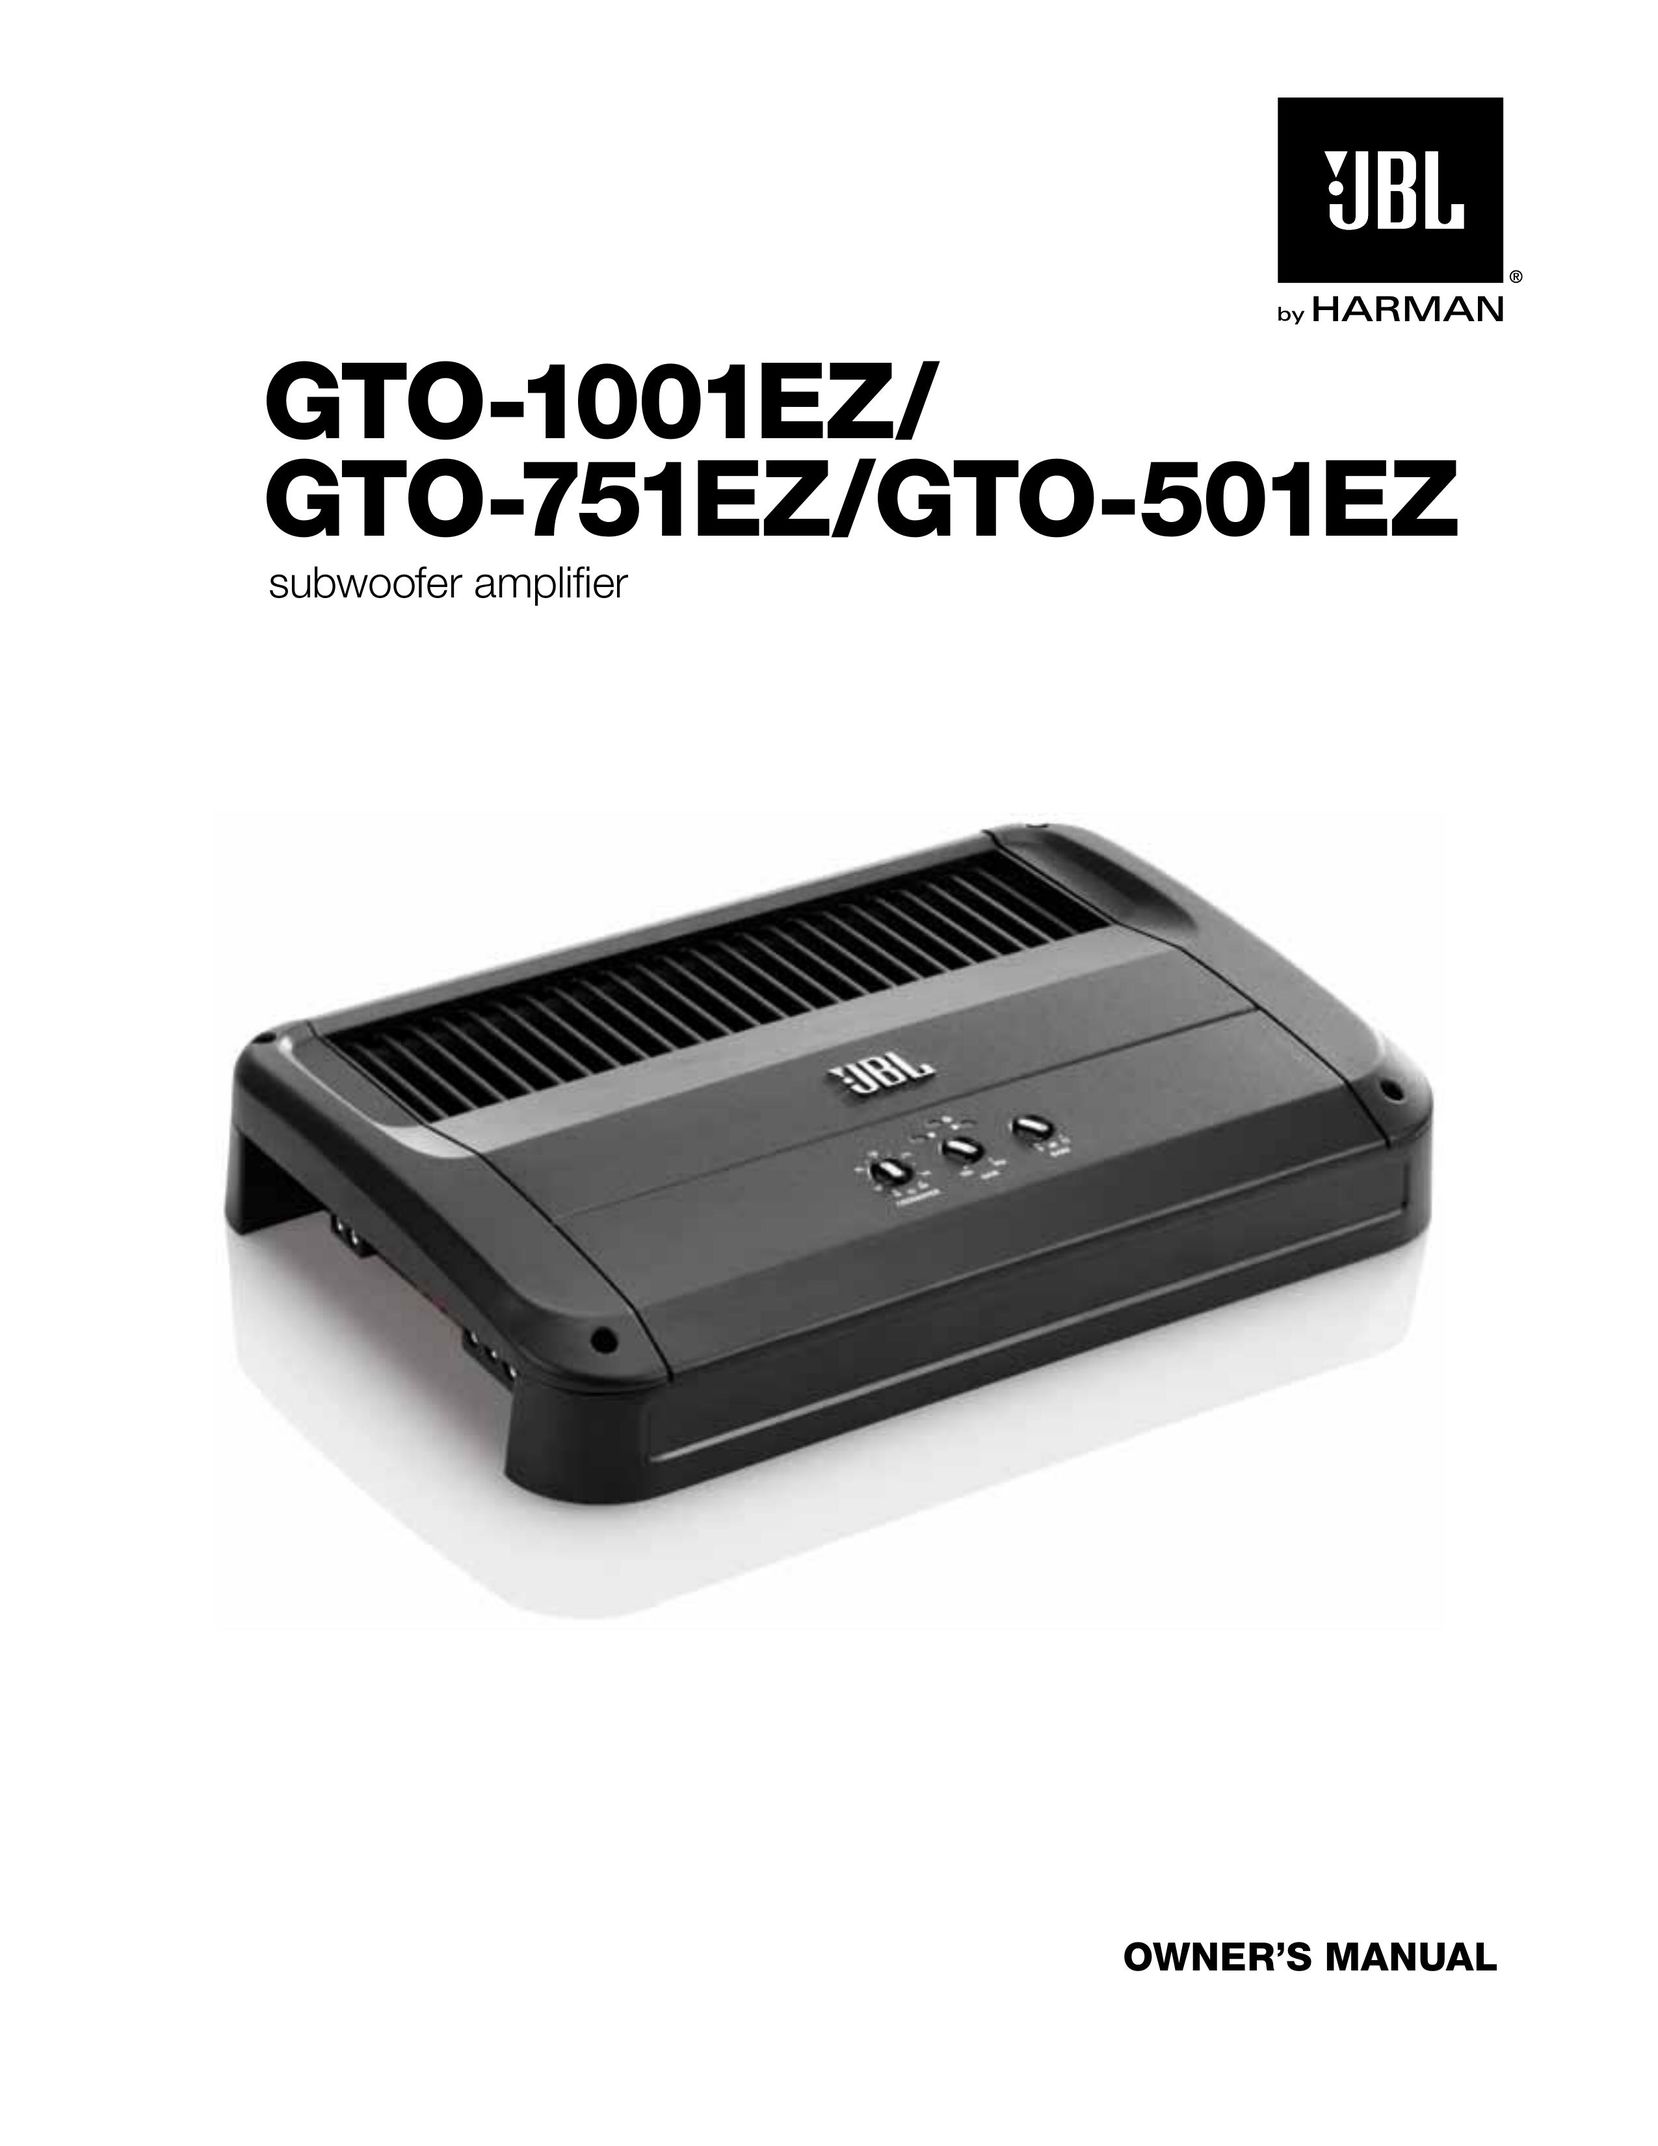 JBL GTO-1001EZ Stereo Amplifier User Manual